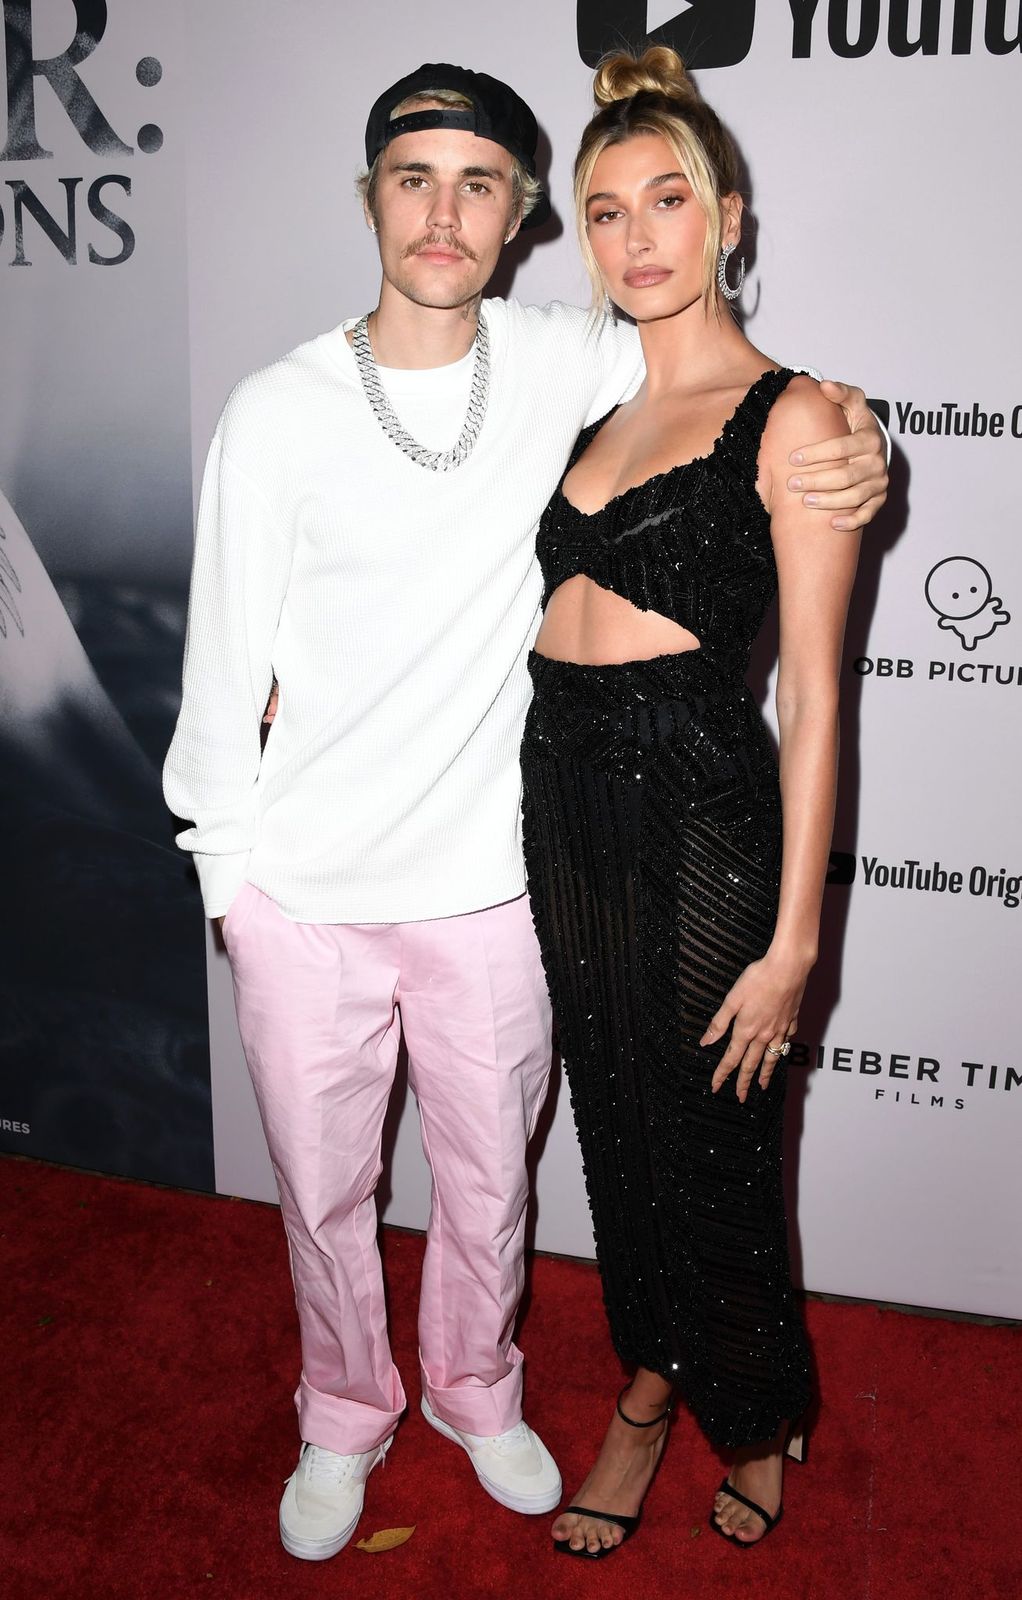 Justin Bieber and Hailey Baldwin at the premiere of YouTube Originals' "Justin Bieber: Seasons" on January 27, 2020, in Los Angeles, California | Photo: Jon Kopaloff/Getty Images